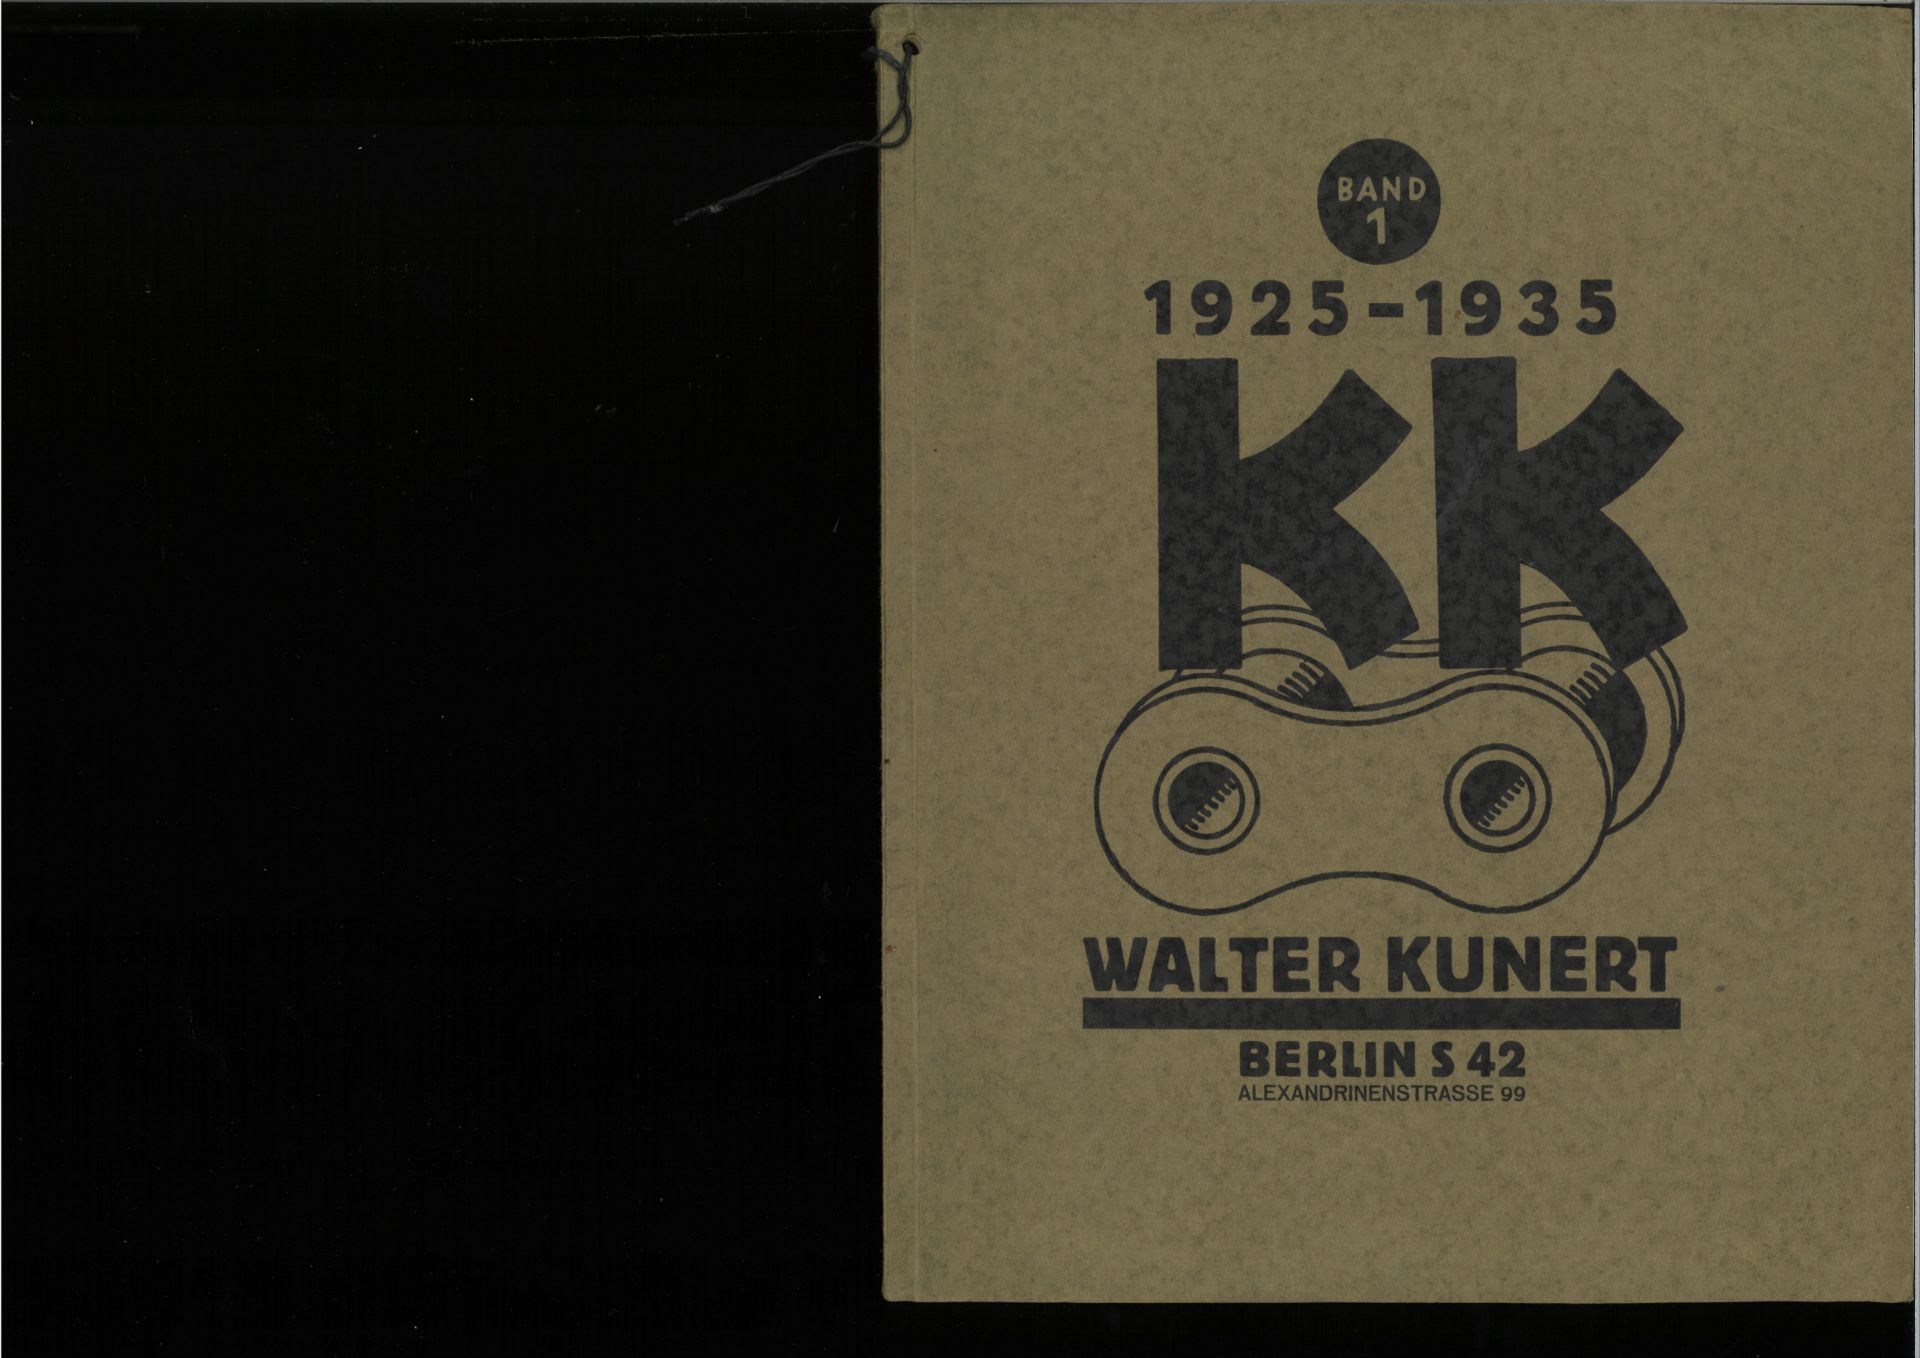 Walter Kunert, Berlin S42, Alexandrinenstrasse 99, Katalog 1935, Band 1 Motorrad, Spezialteile und